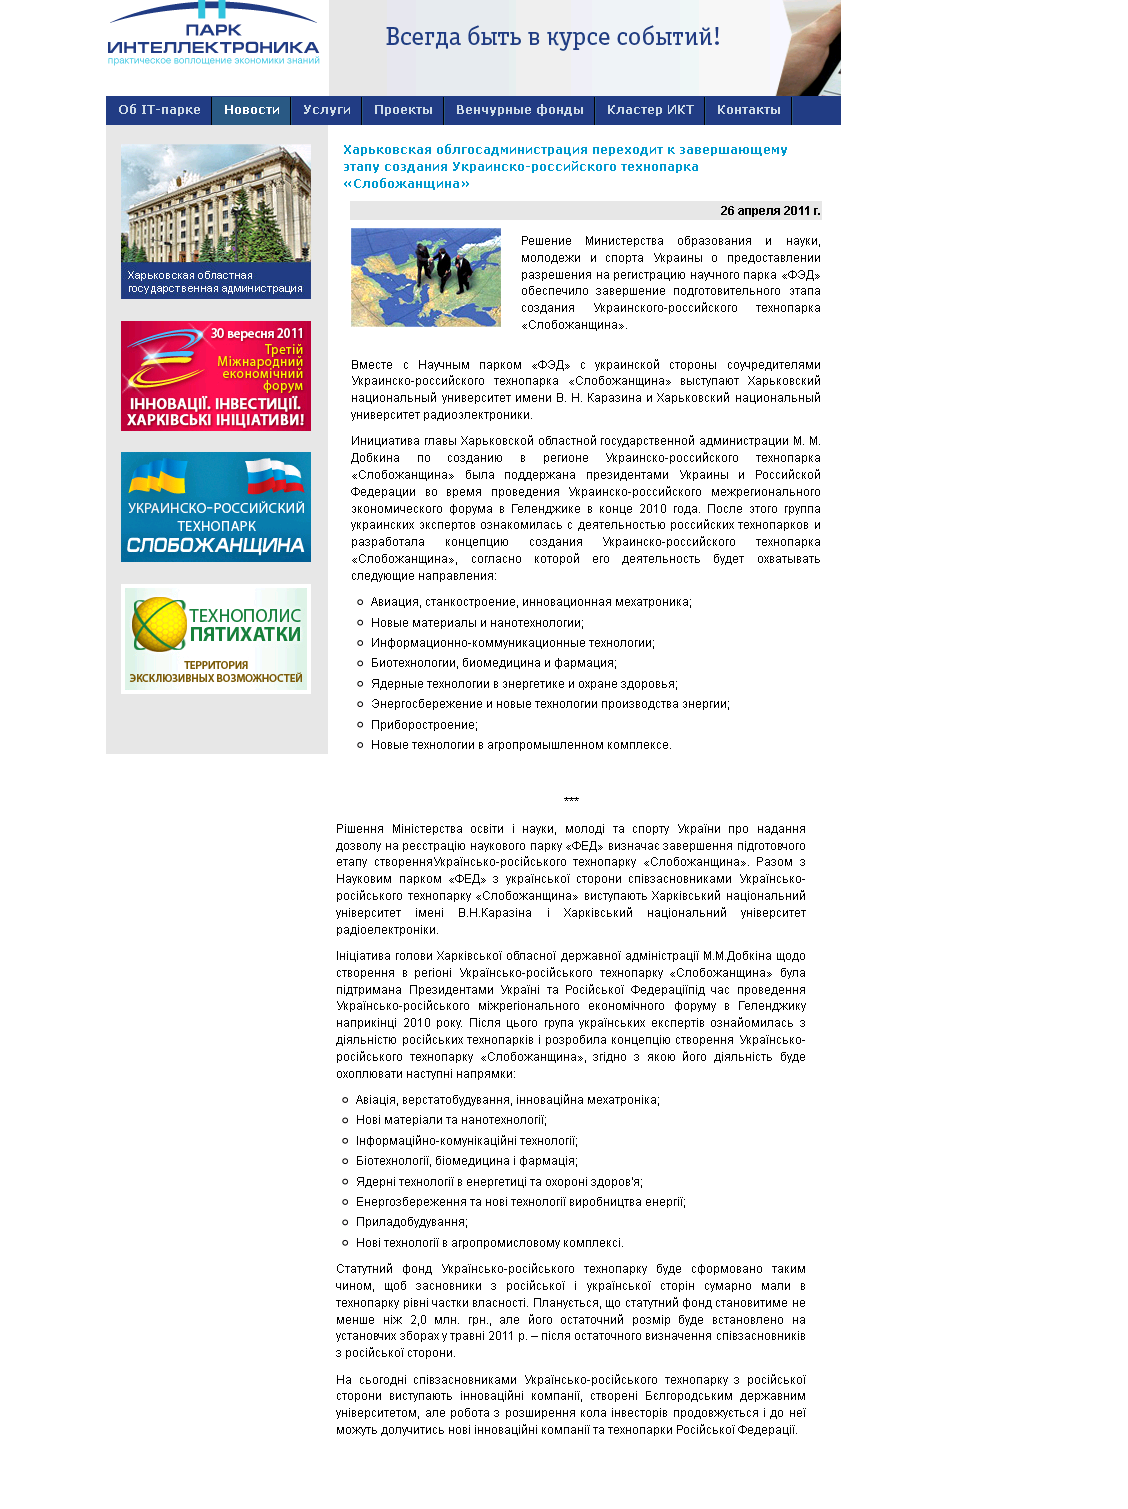 http://intellectronics.com.ua/index.php/news/press/152-slobofounders